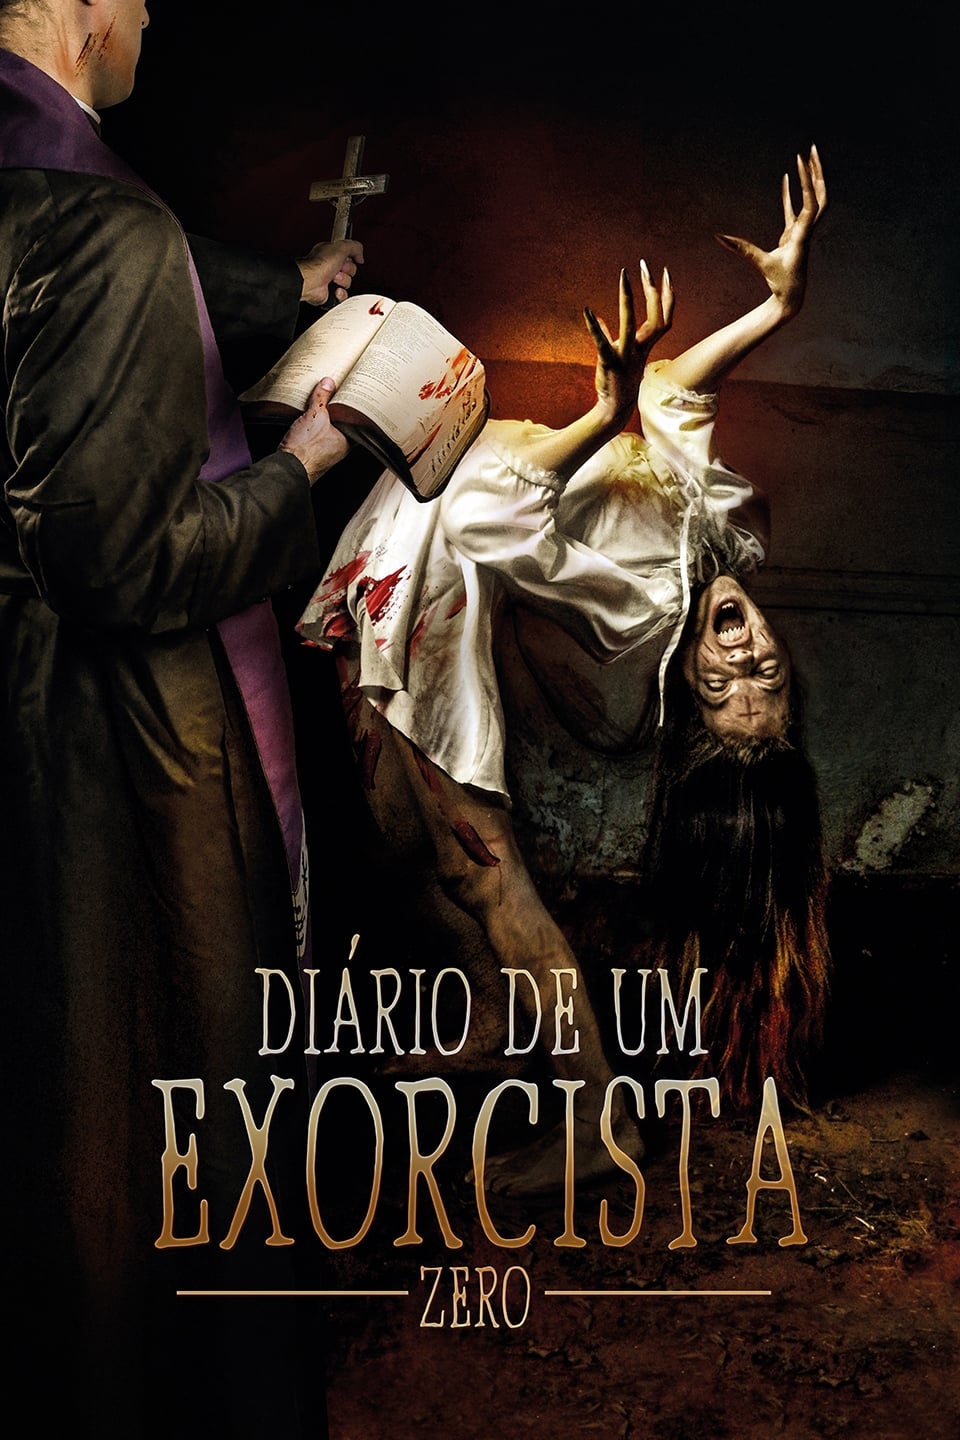 Diary of an Exorcist - Zero